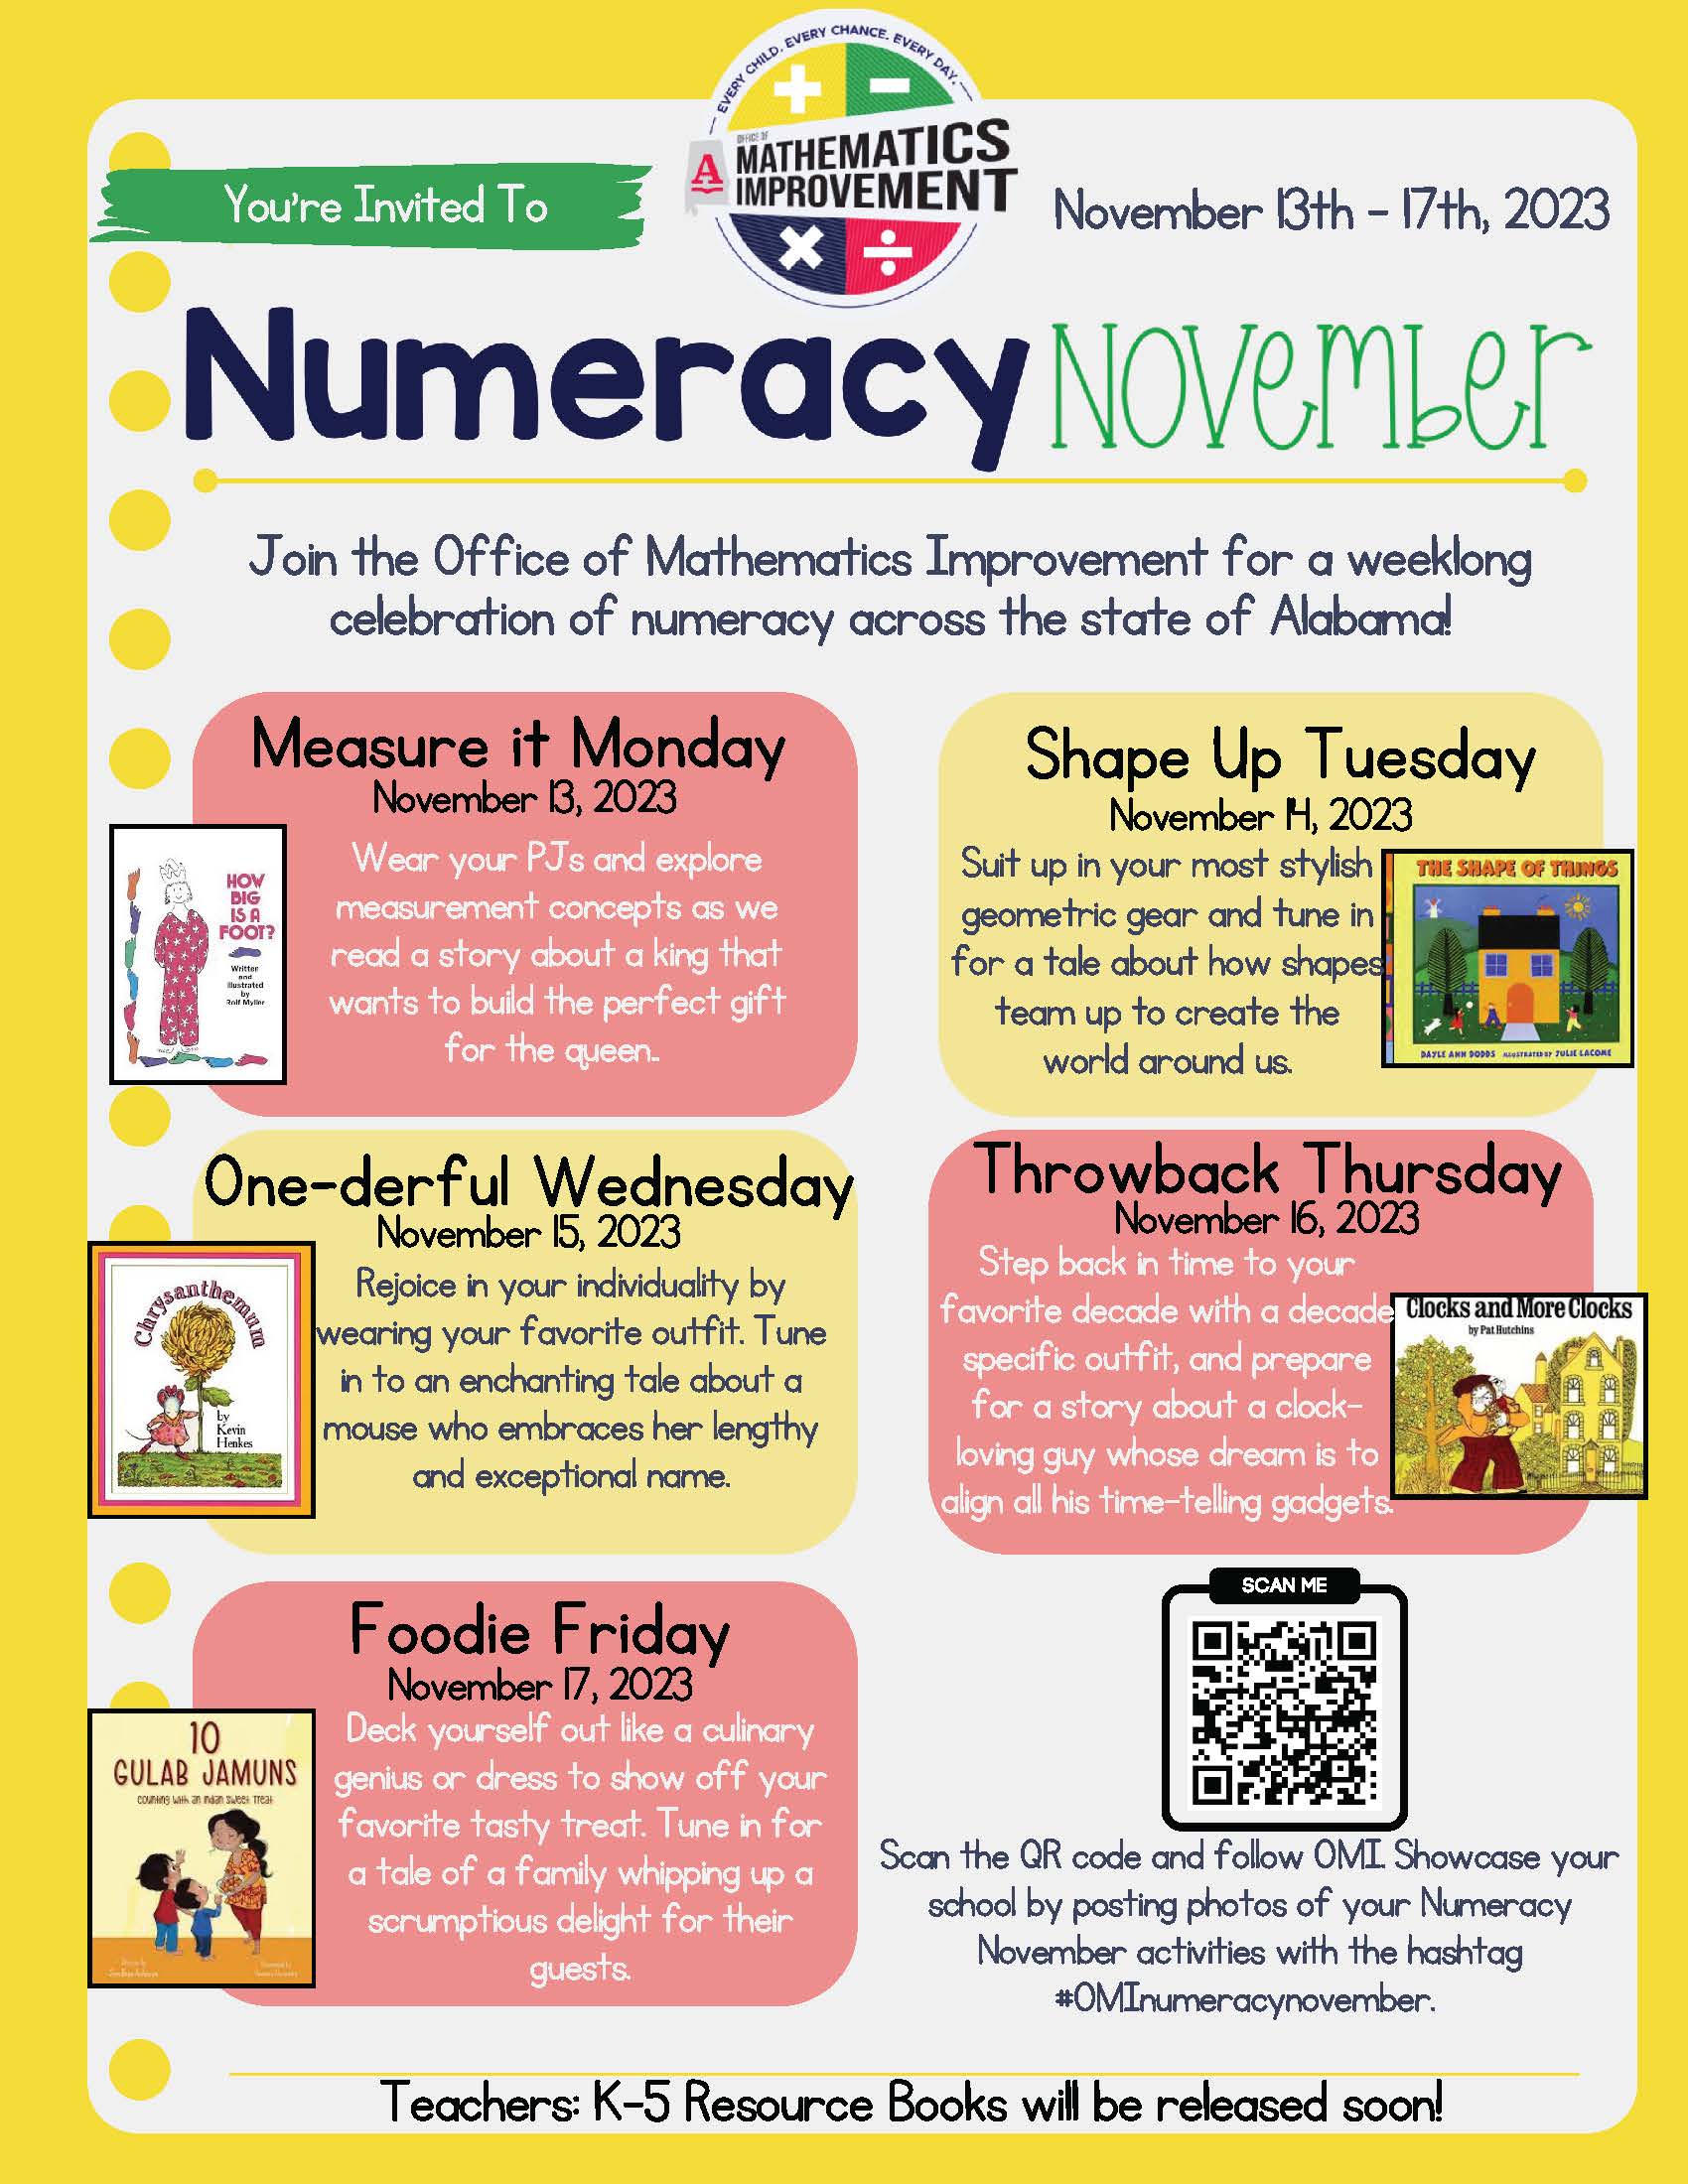 Numeracy Week
November 13-17, 2023